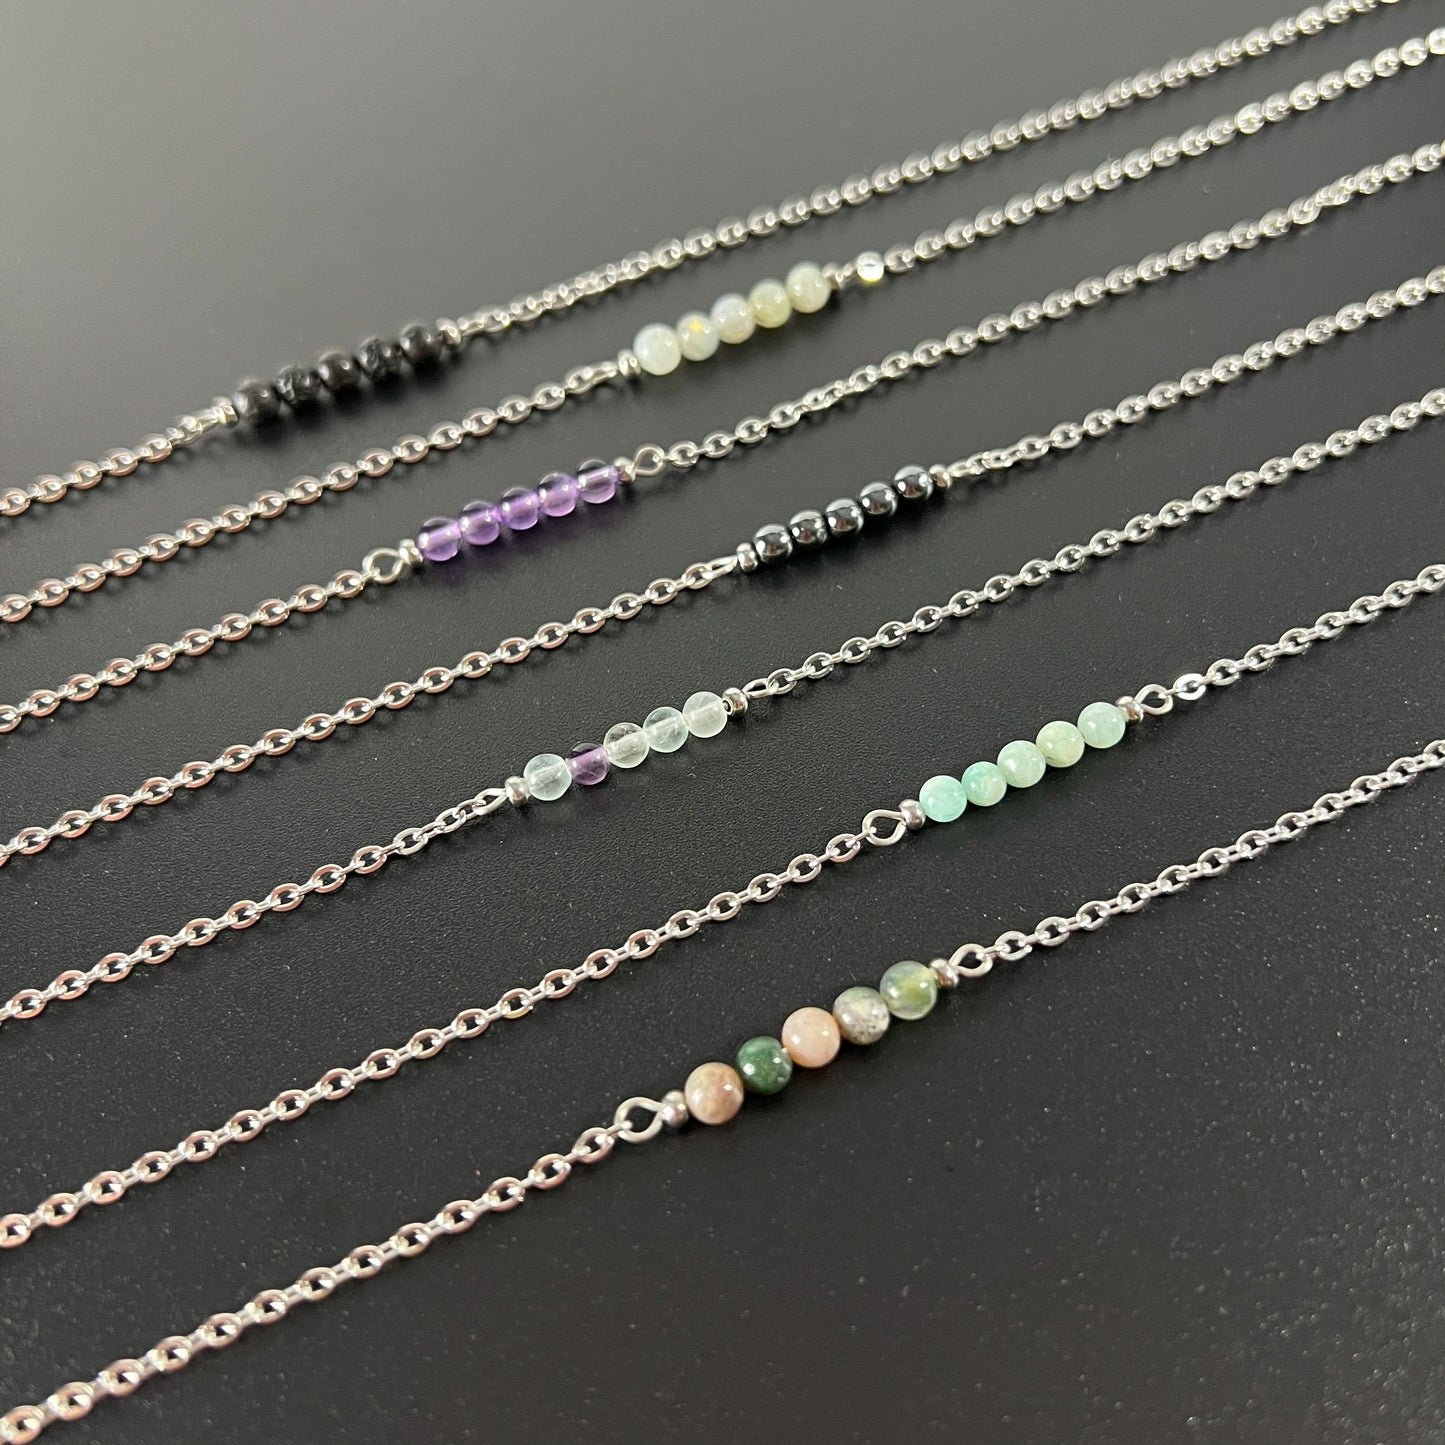 Round beads gemstone necklace, hypoallergenic waterproof stainless steel